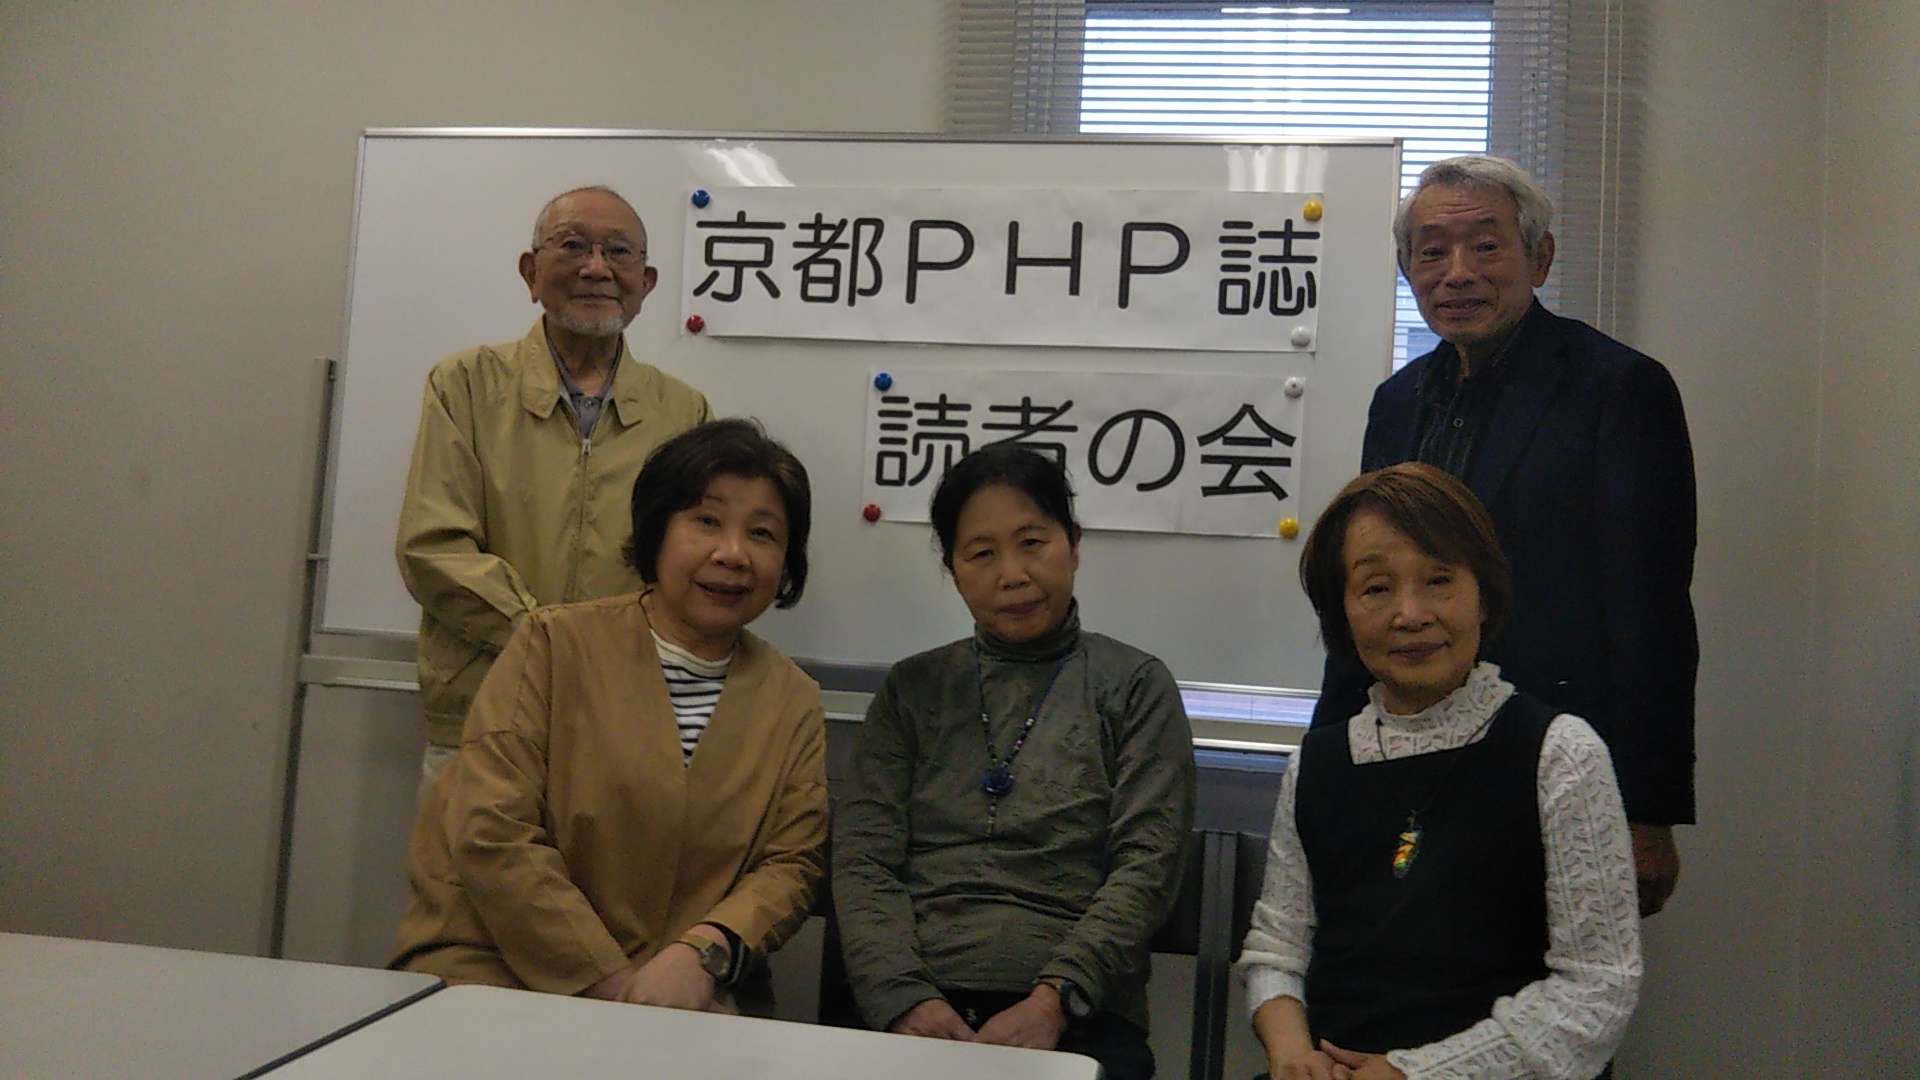 京都PHP誌読者の会 4月度例会を開催